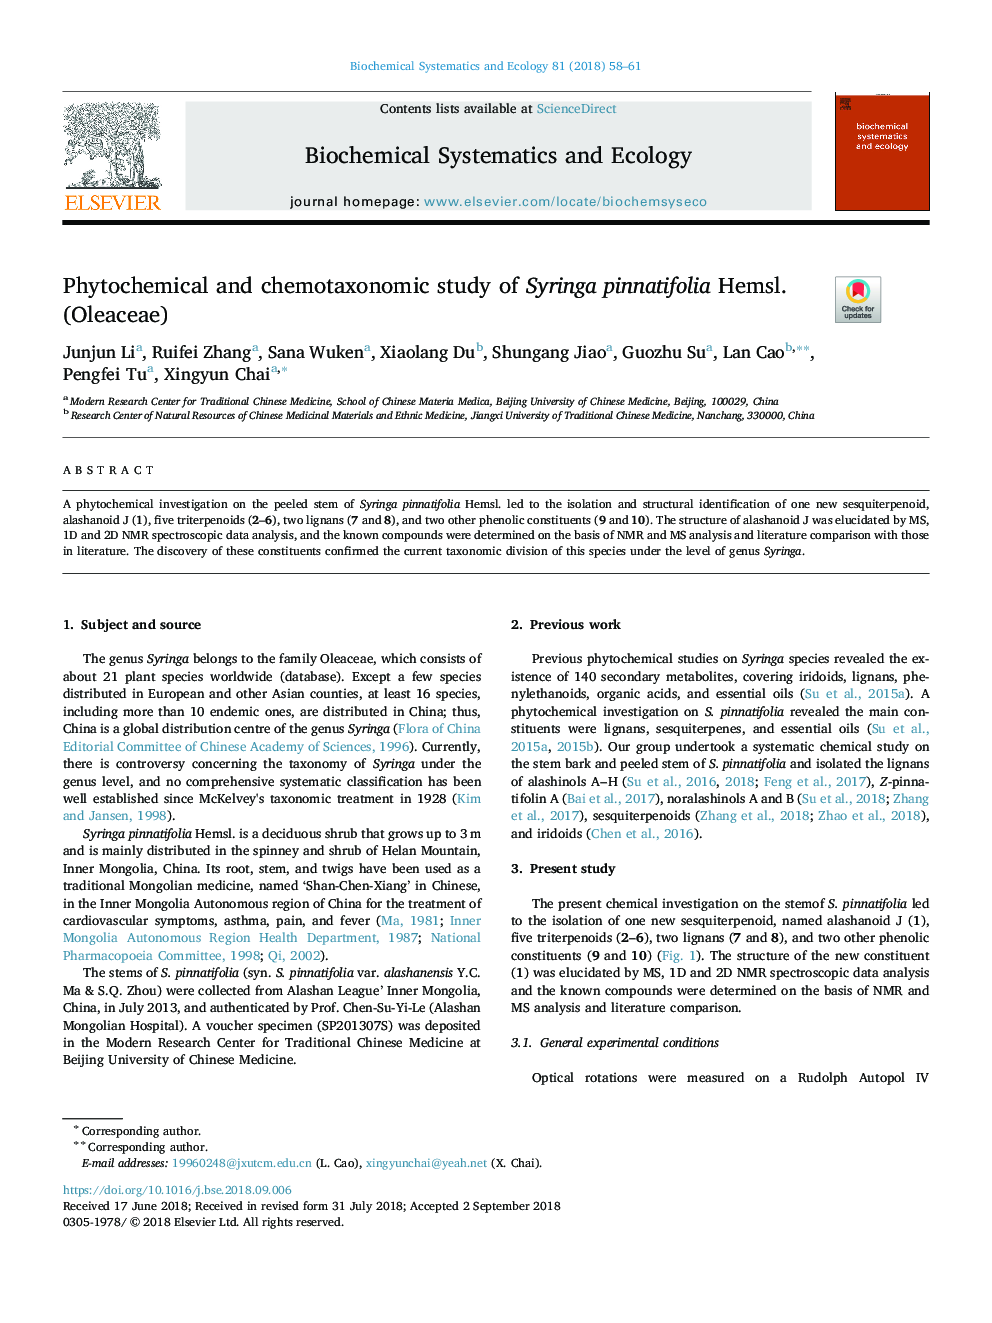 Phytochemical and chemotaxonomic study of Syringa pinnatifolia Hemsl. (Oleaceae)